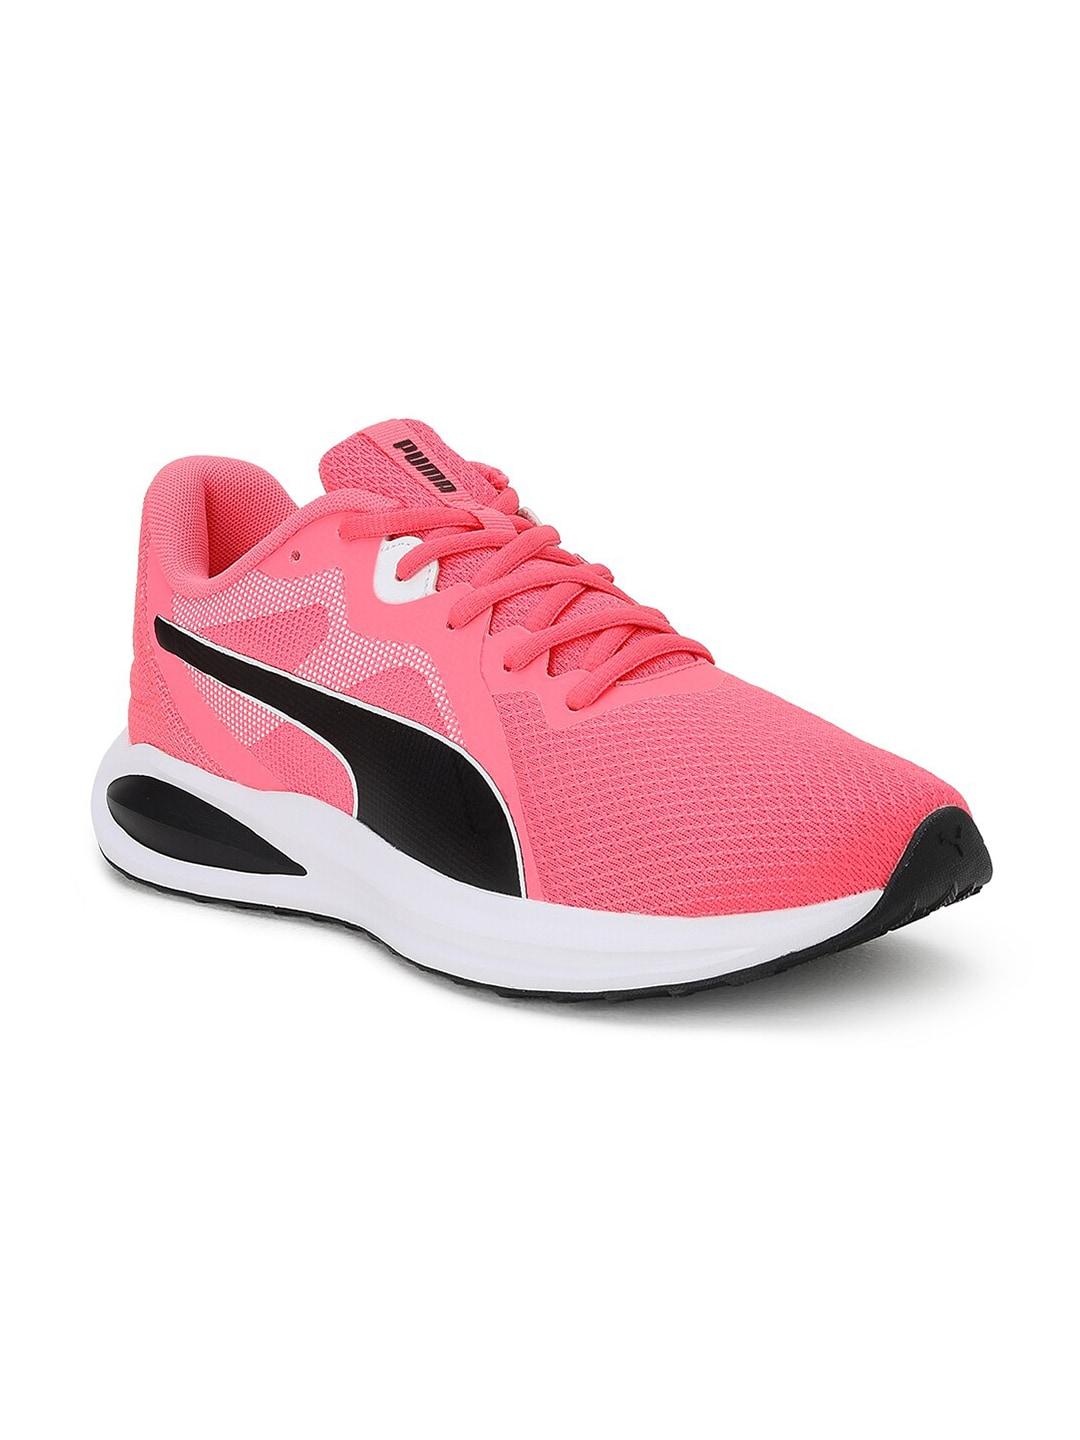 Puma Women Pink Twitch Running Shoes